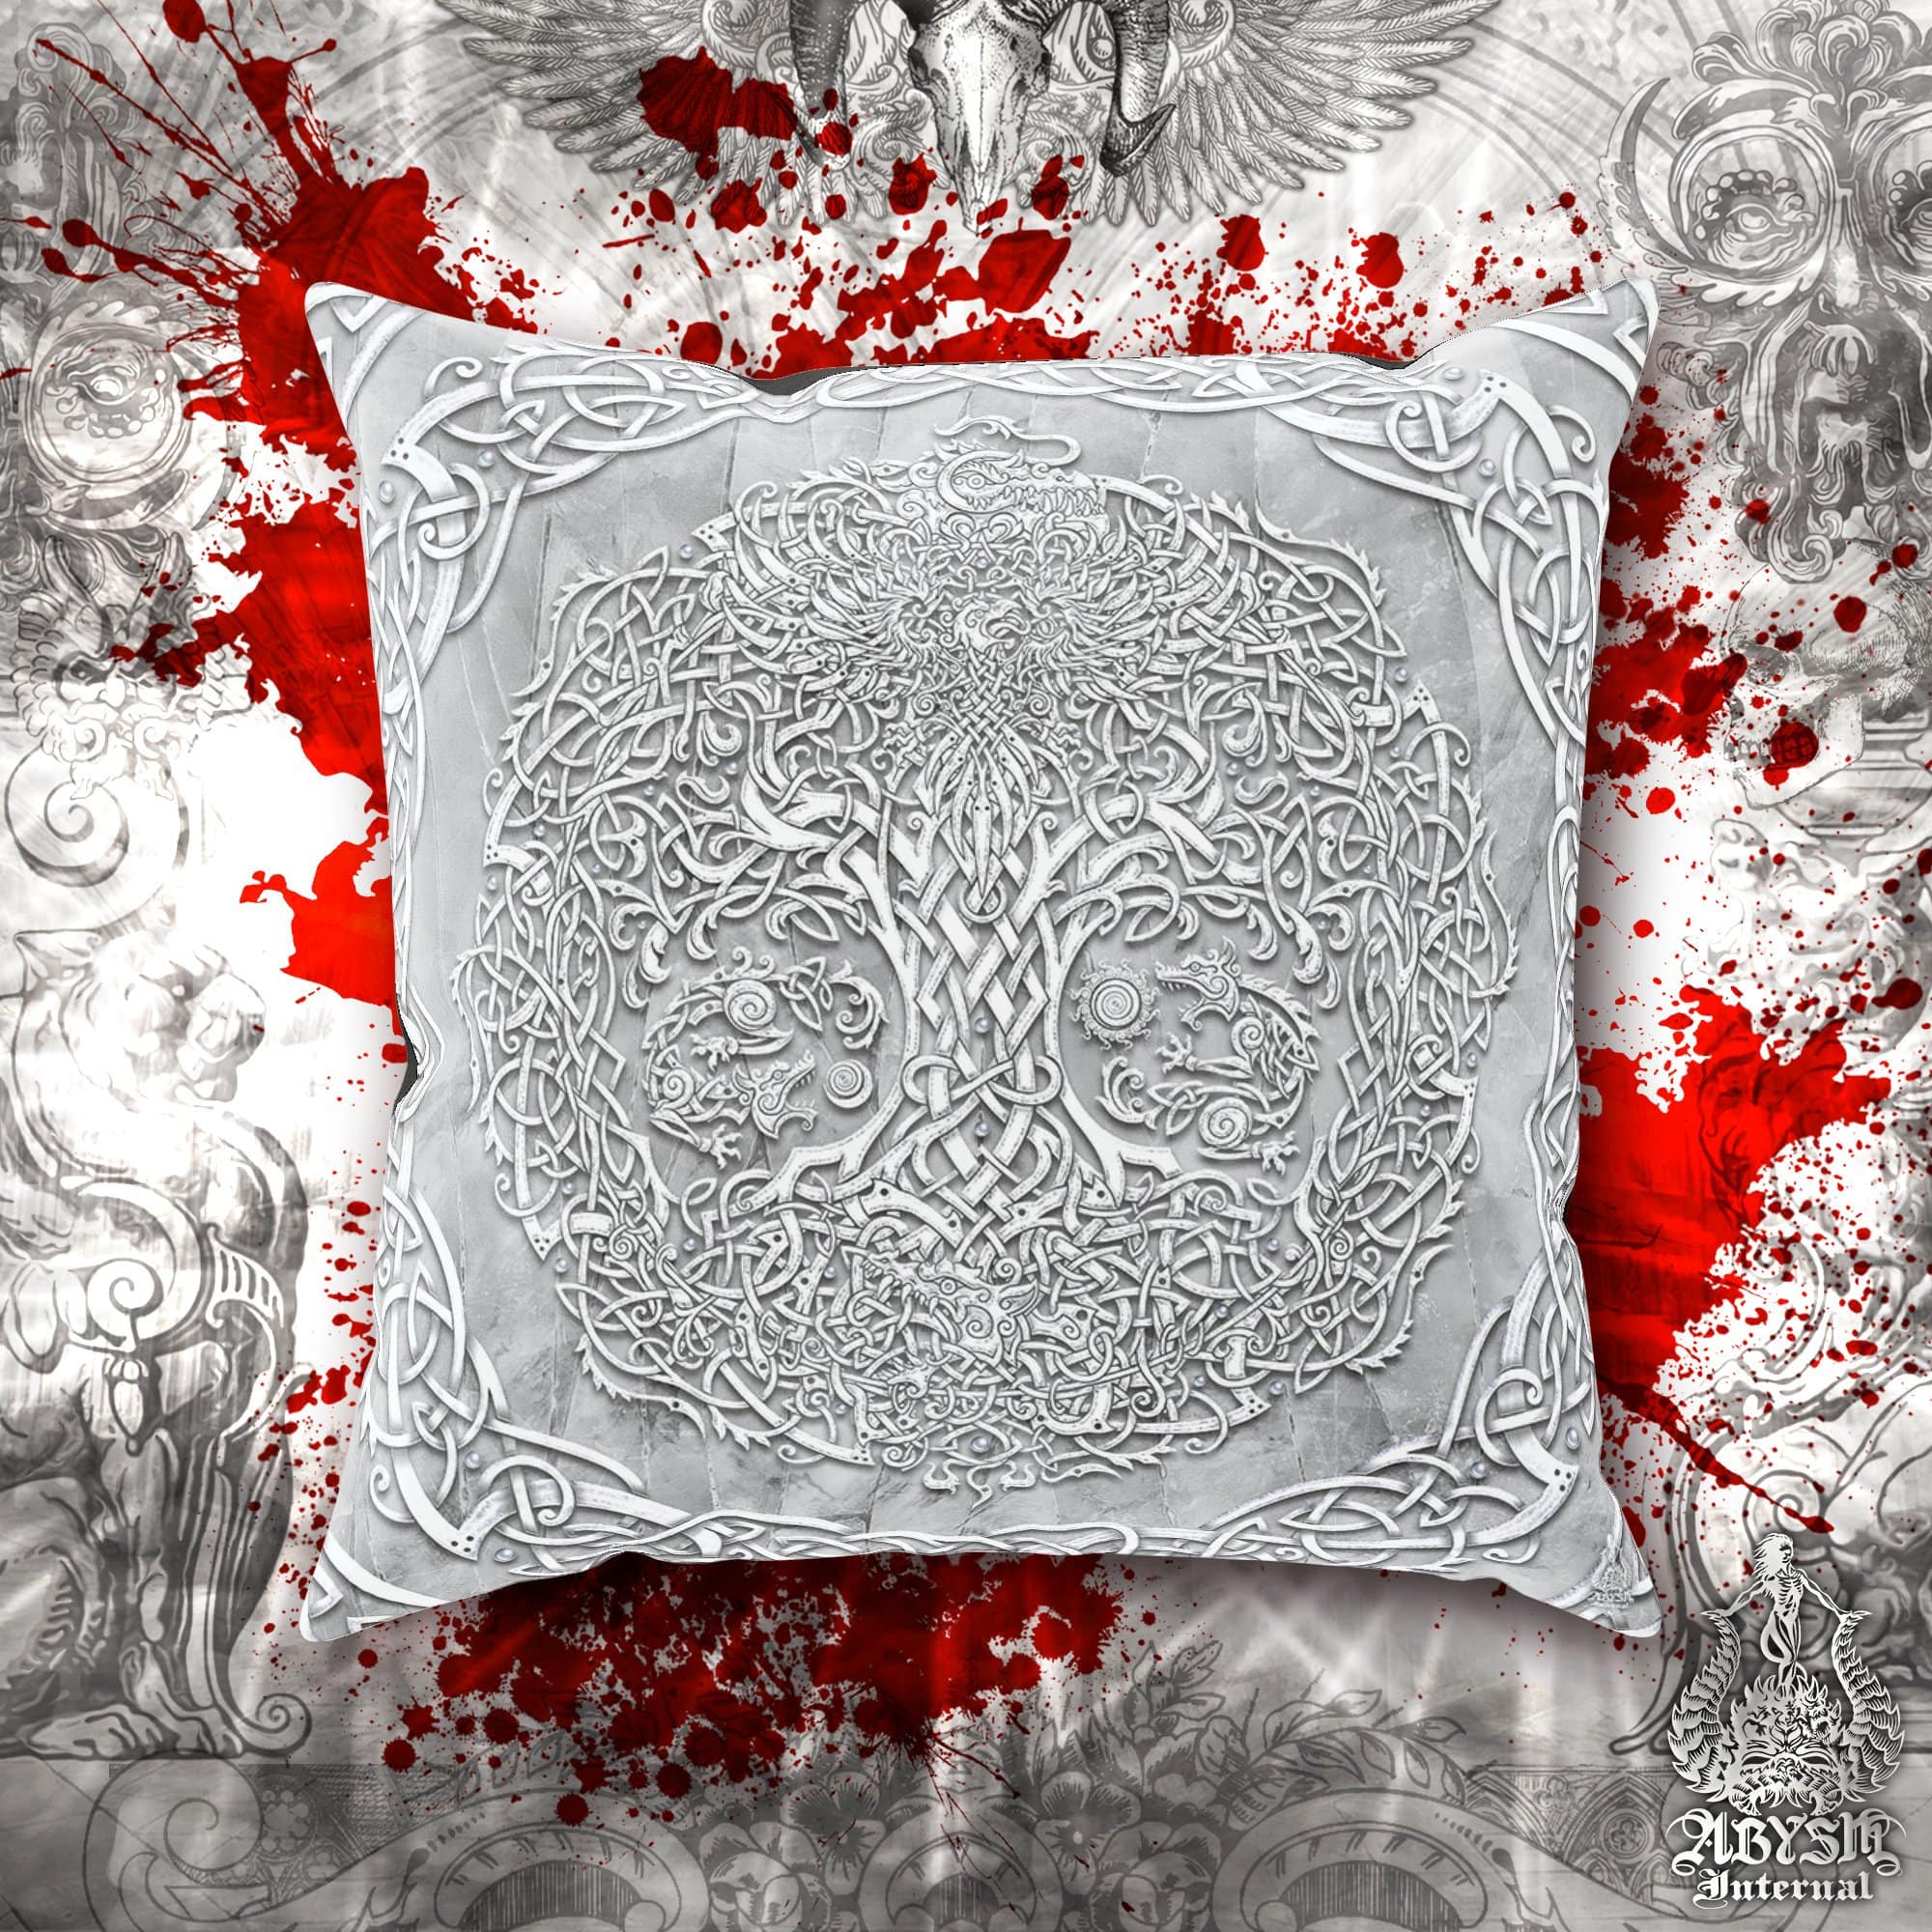 Viking Throw Pillow, Decorative Accent Cushion, Yggdrasil, Norse Decor, Nordic Art, Alternative Home - Tree of Life, Stone - Abysm Internal